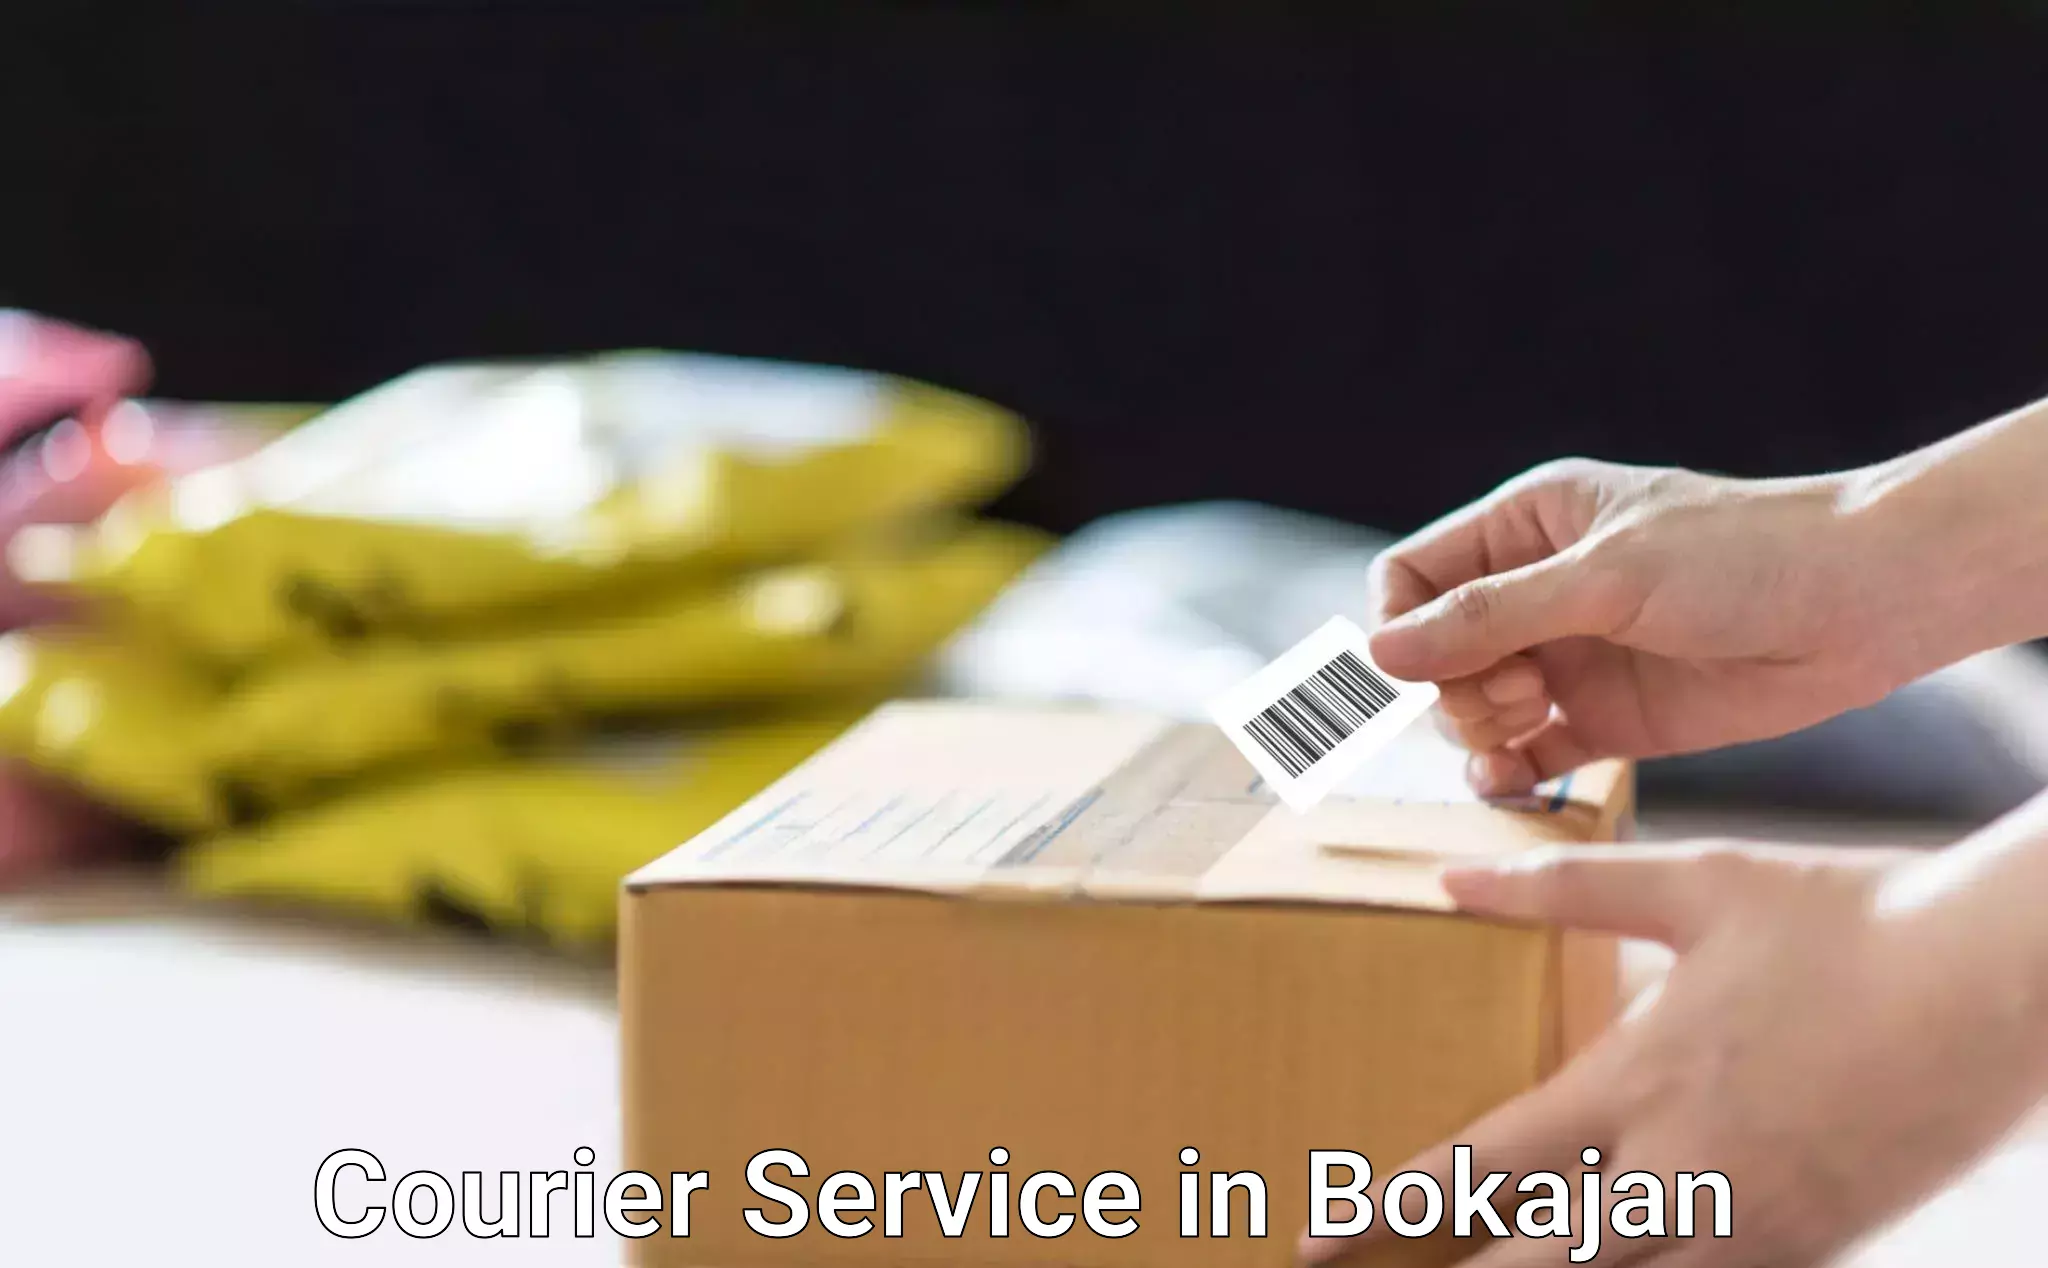 Efficient package consolidation in Bokajan